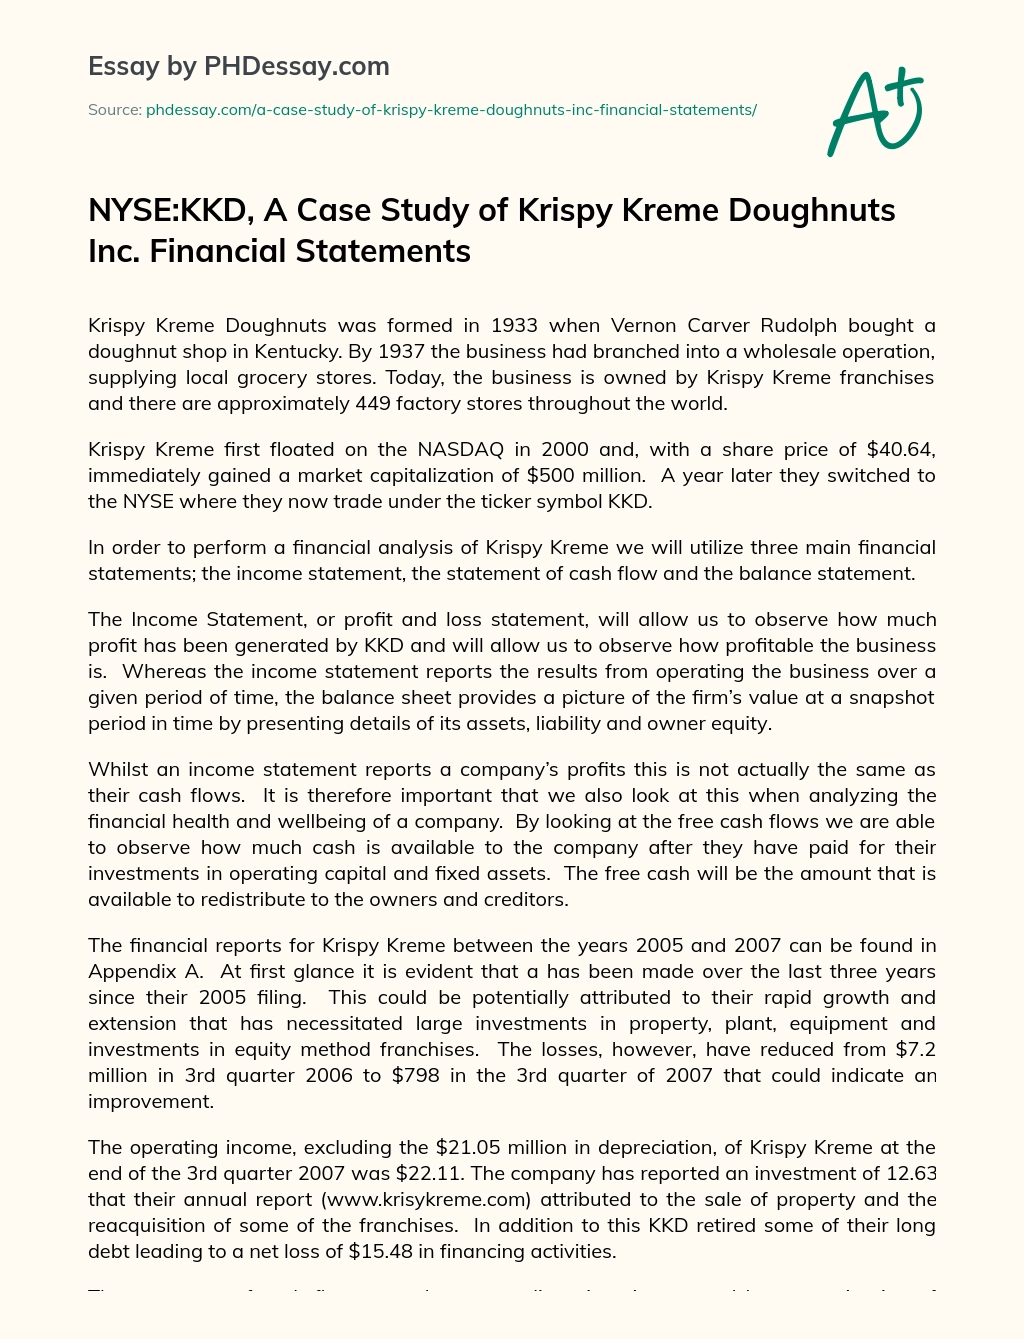 krispy kreme case study financial analysis